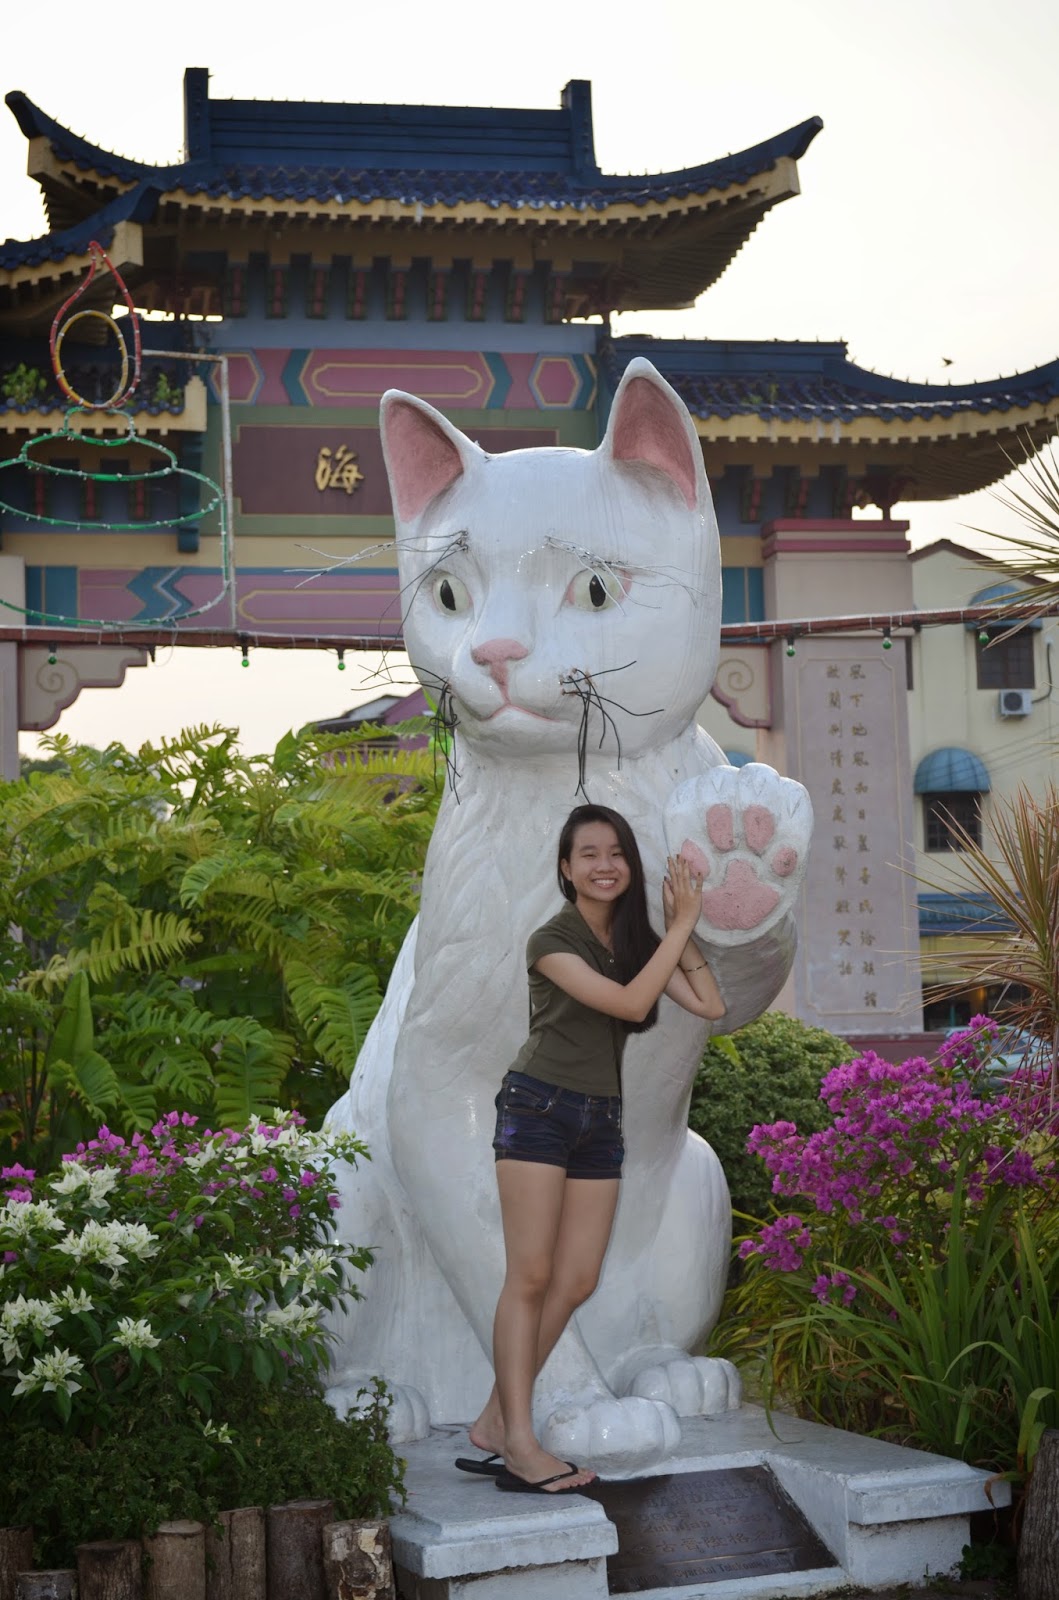 Pn Tay's Blog: Kuching Cat Statues